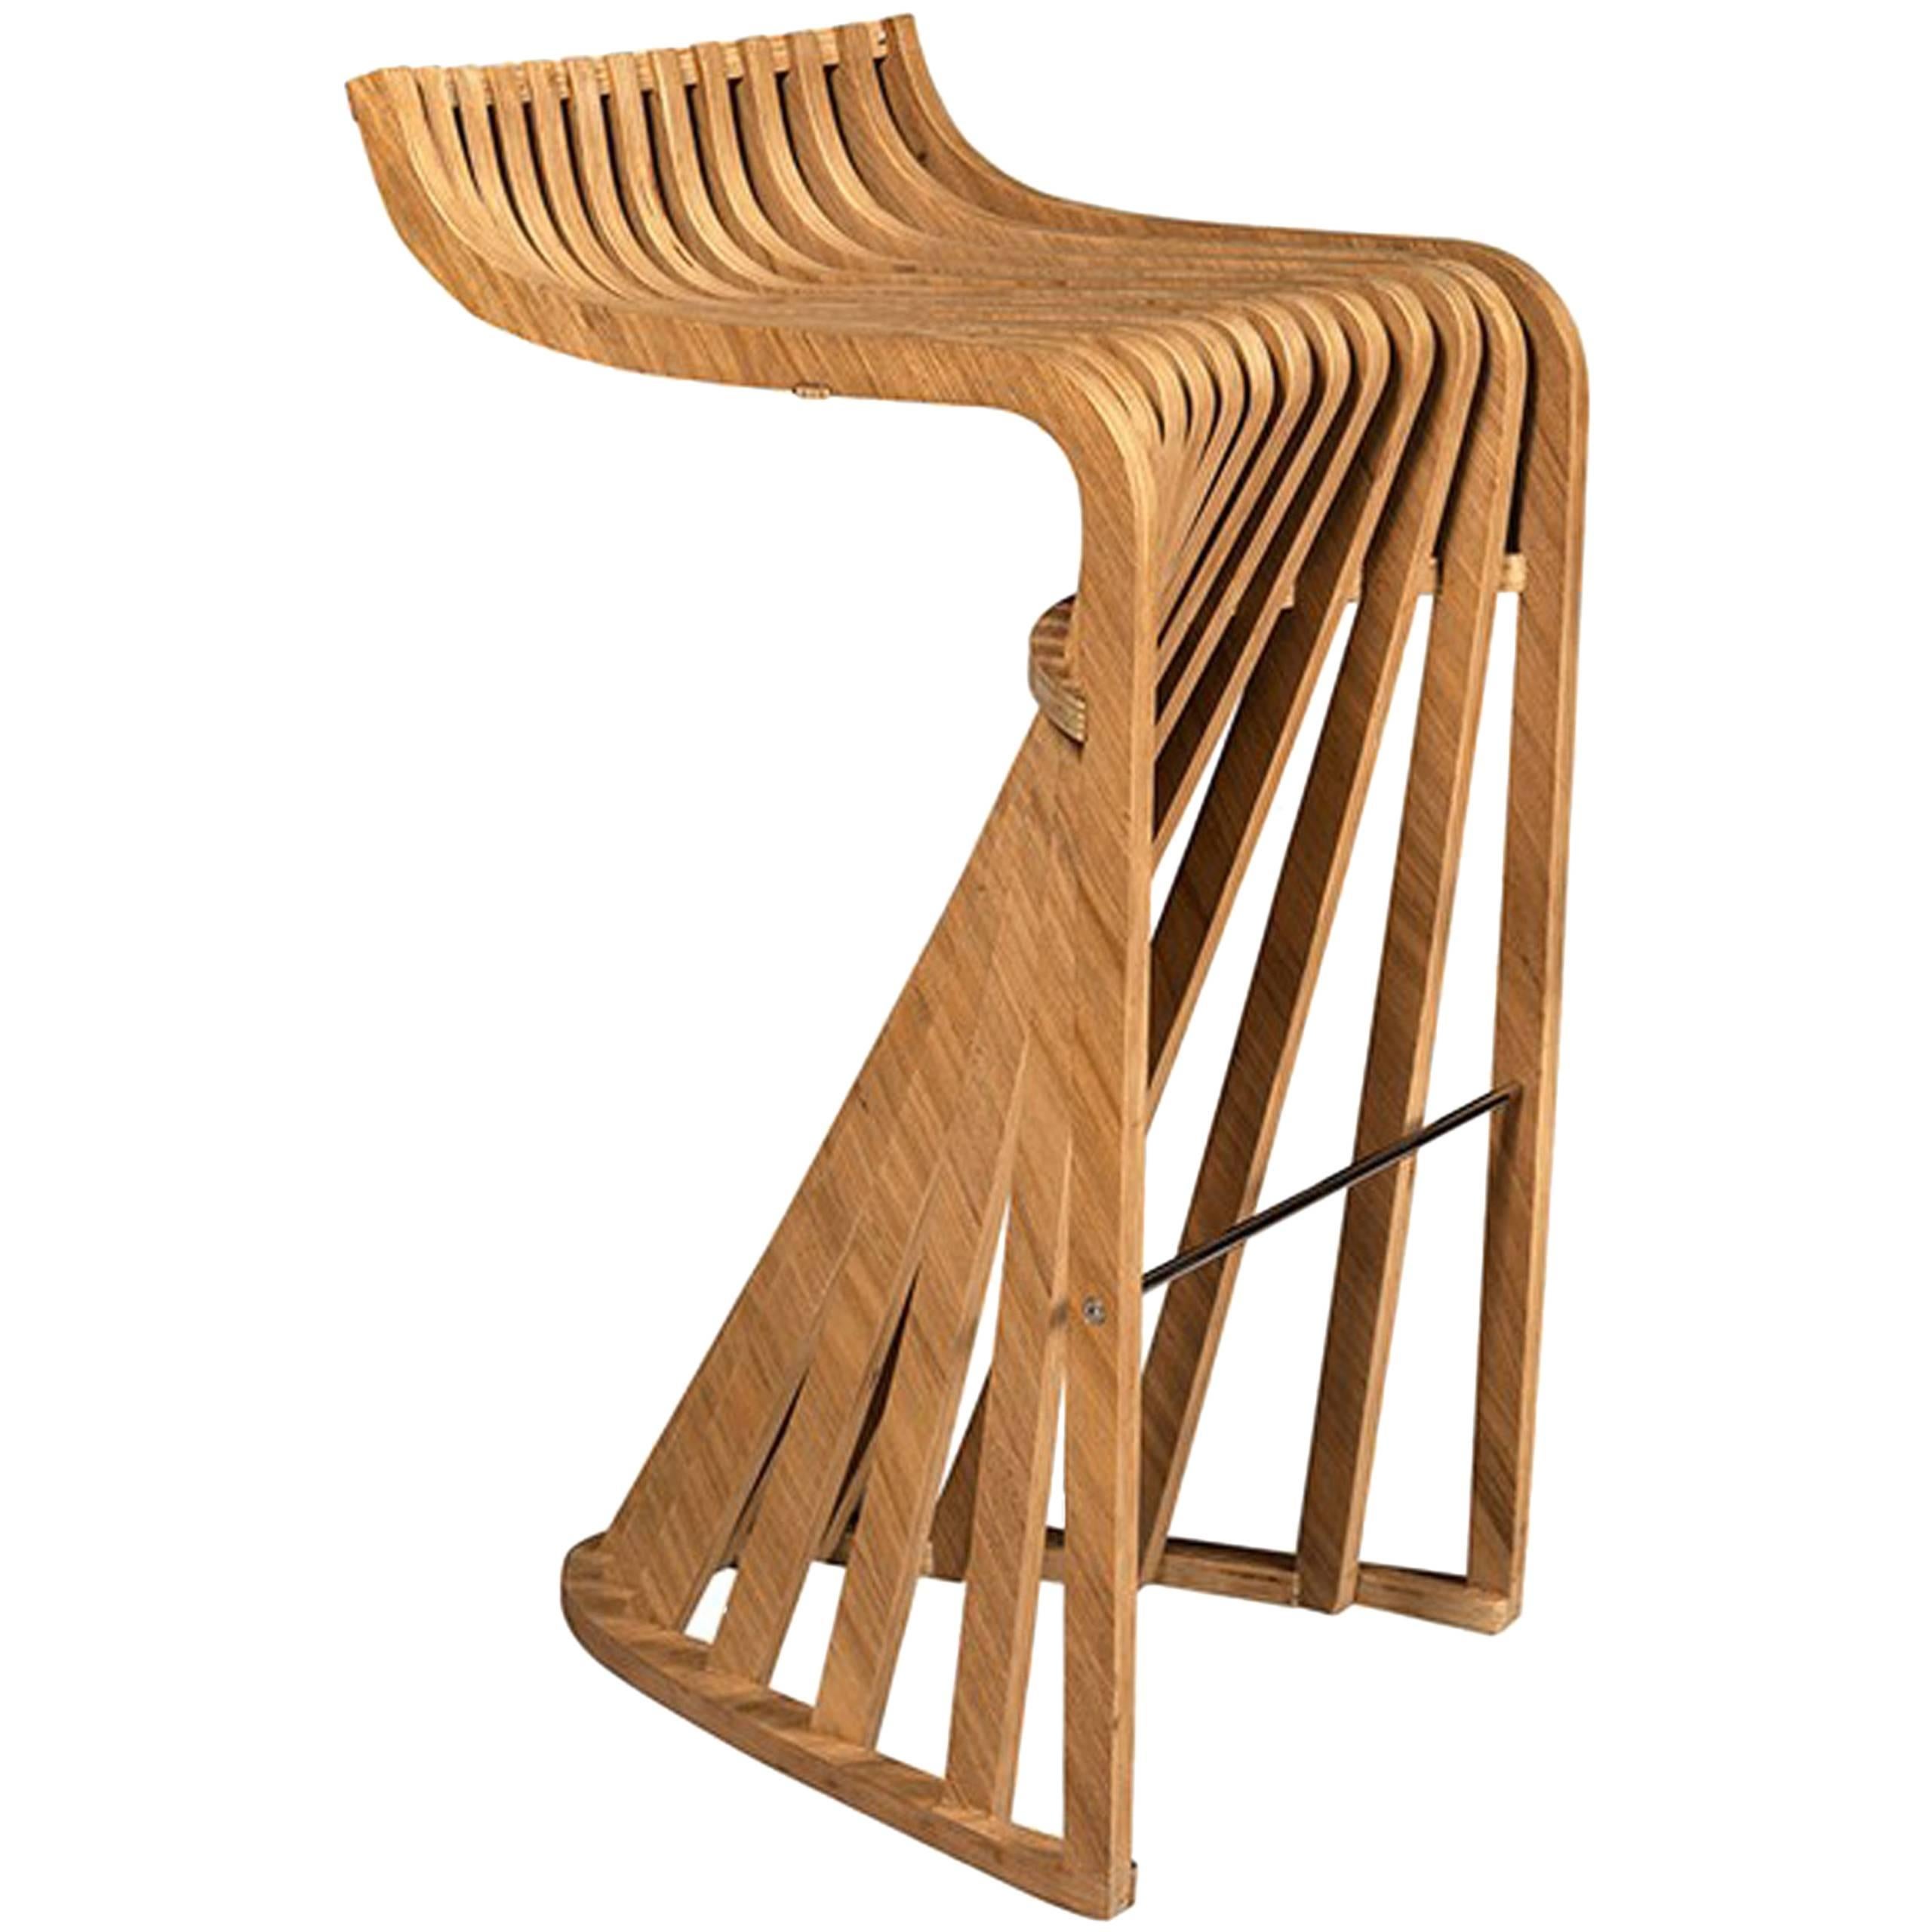 Pantosh Brazilian Contemporary Wood Stool by Lattoog